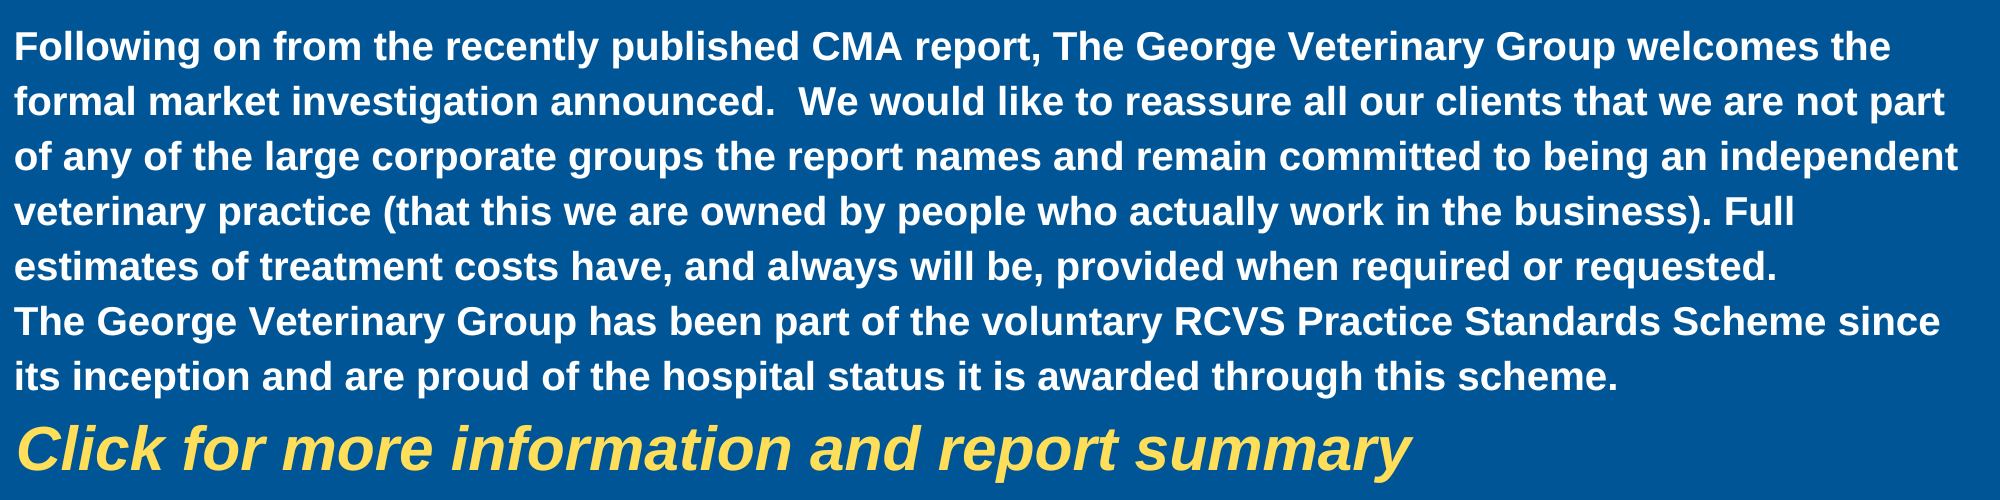 CMA report into veterinary practices